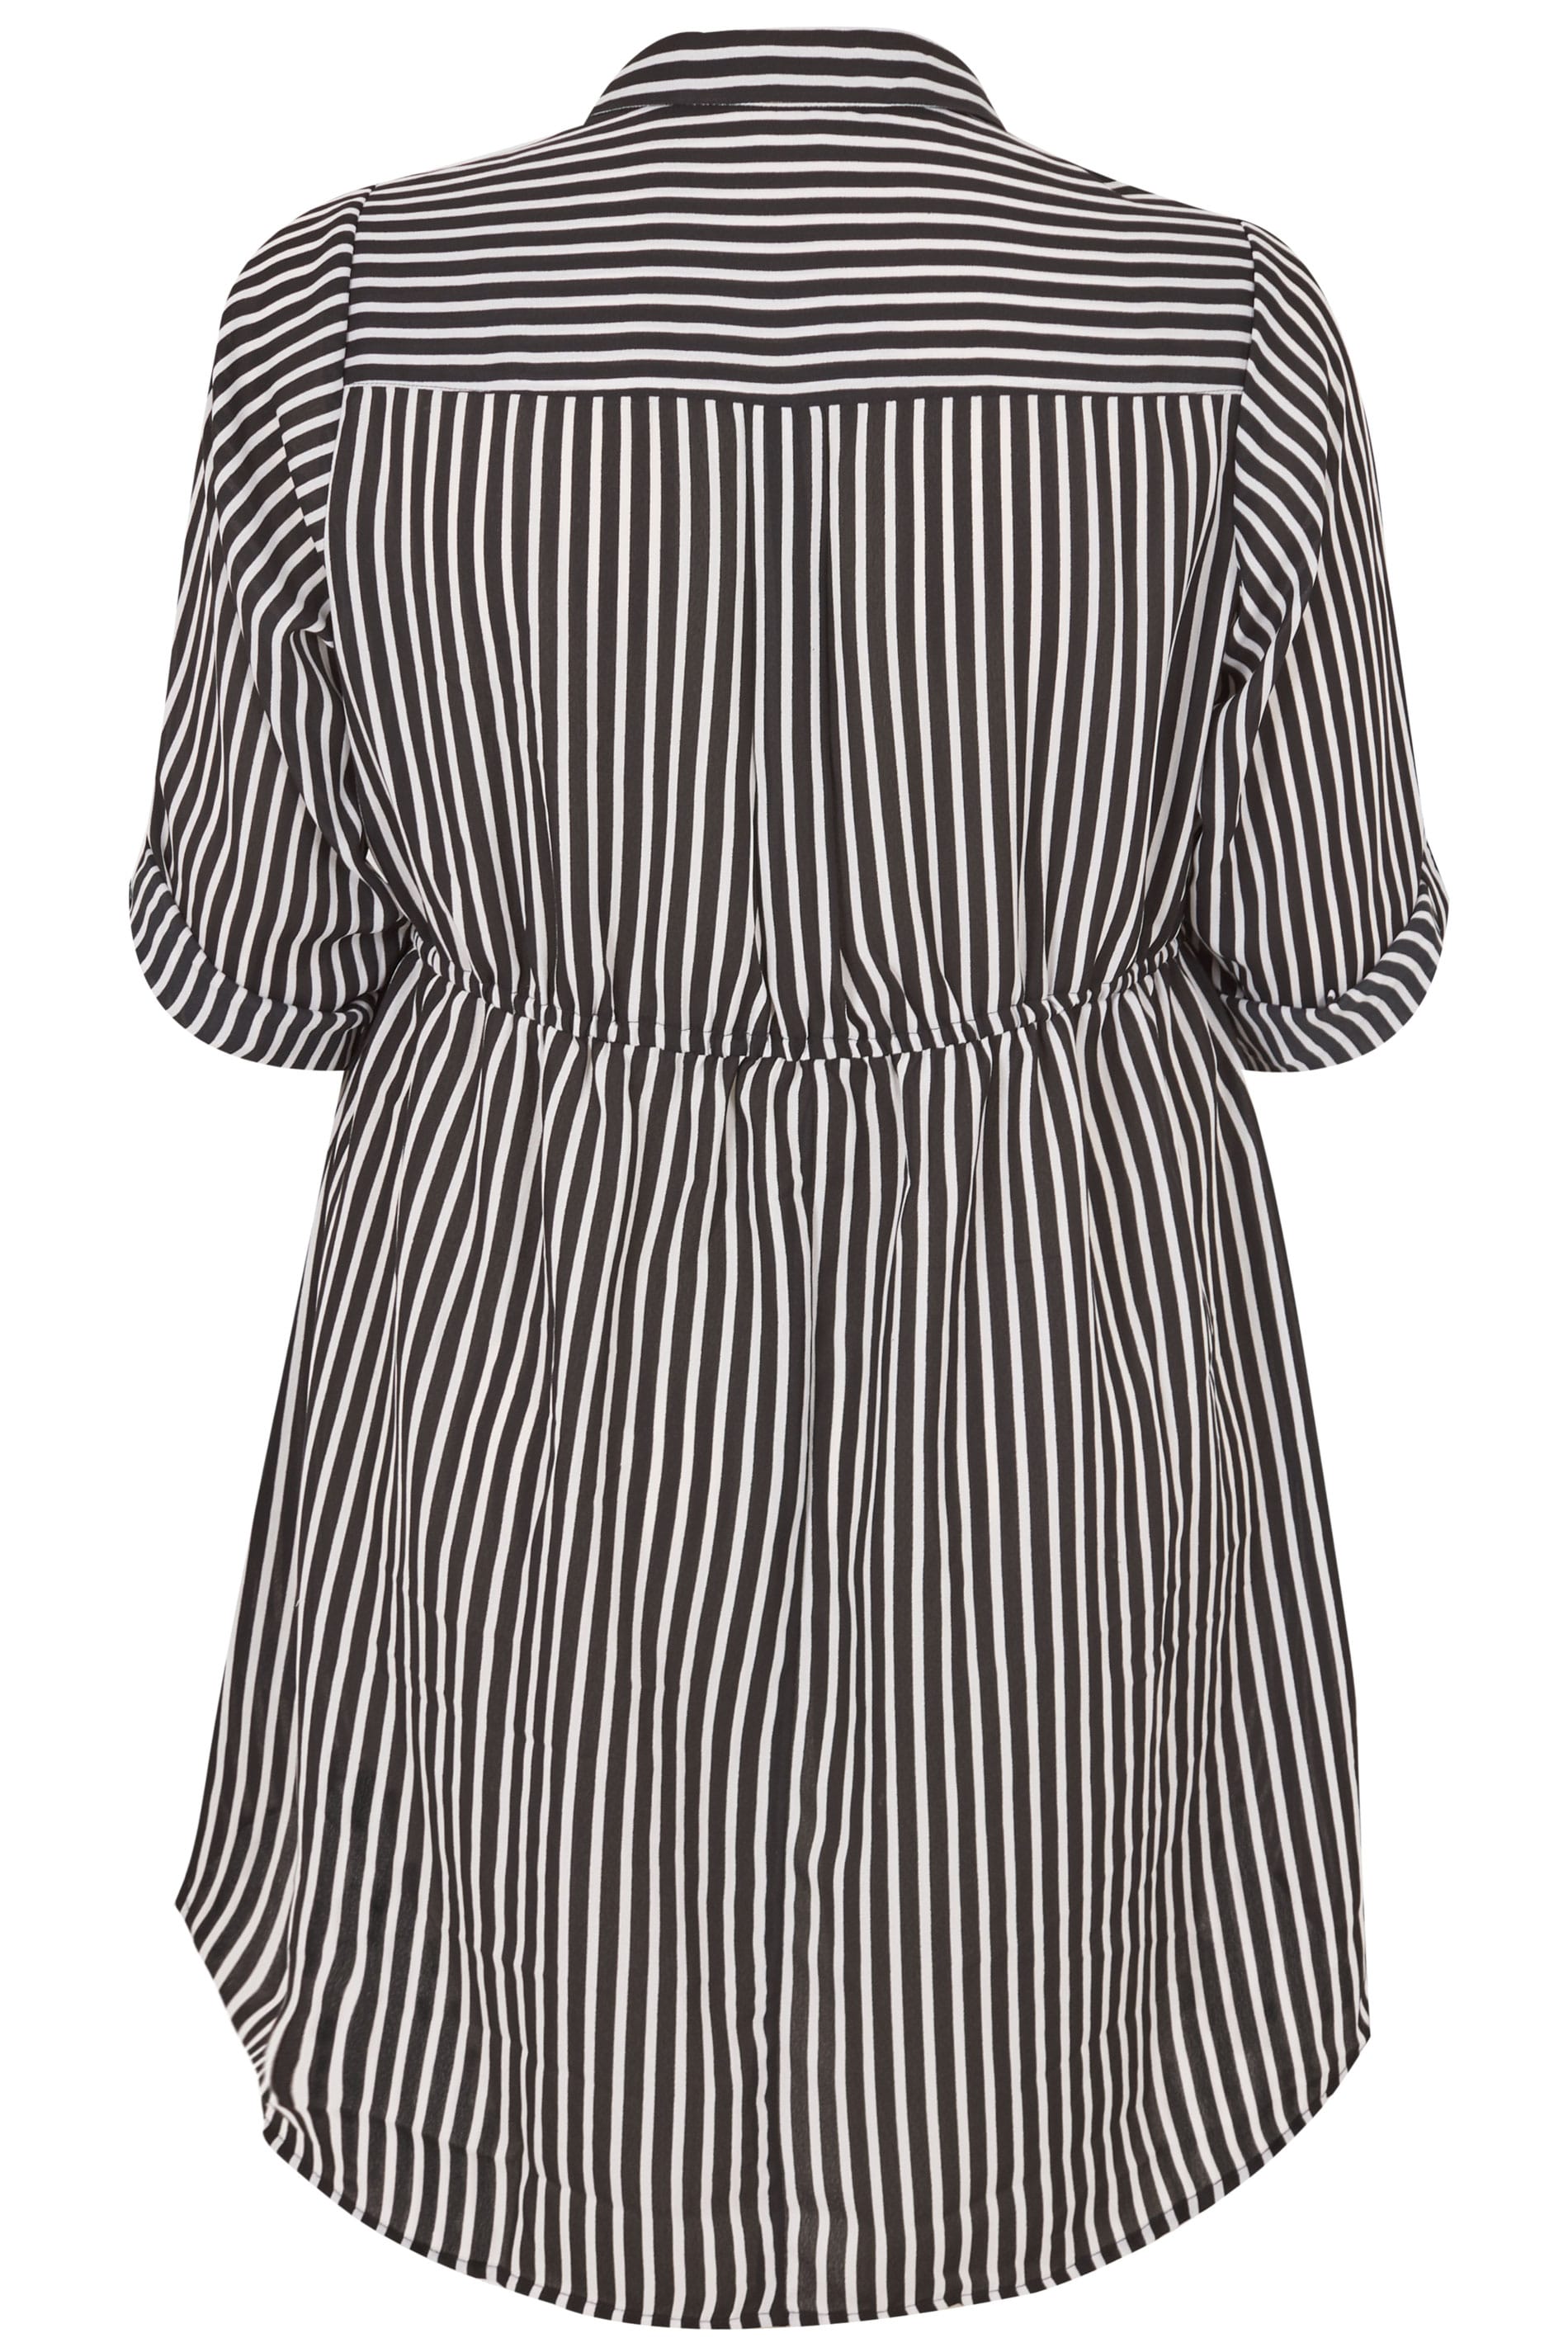 Black & White Striped Longline Shirt, plus size 16 to 36